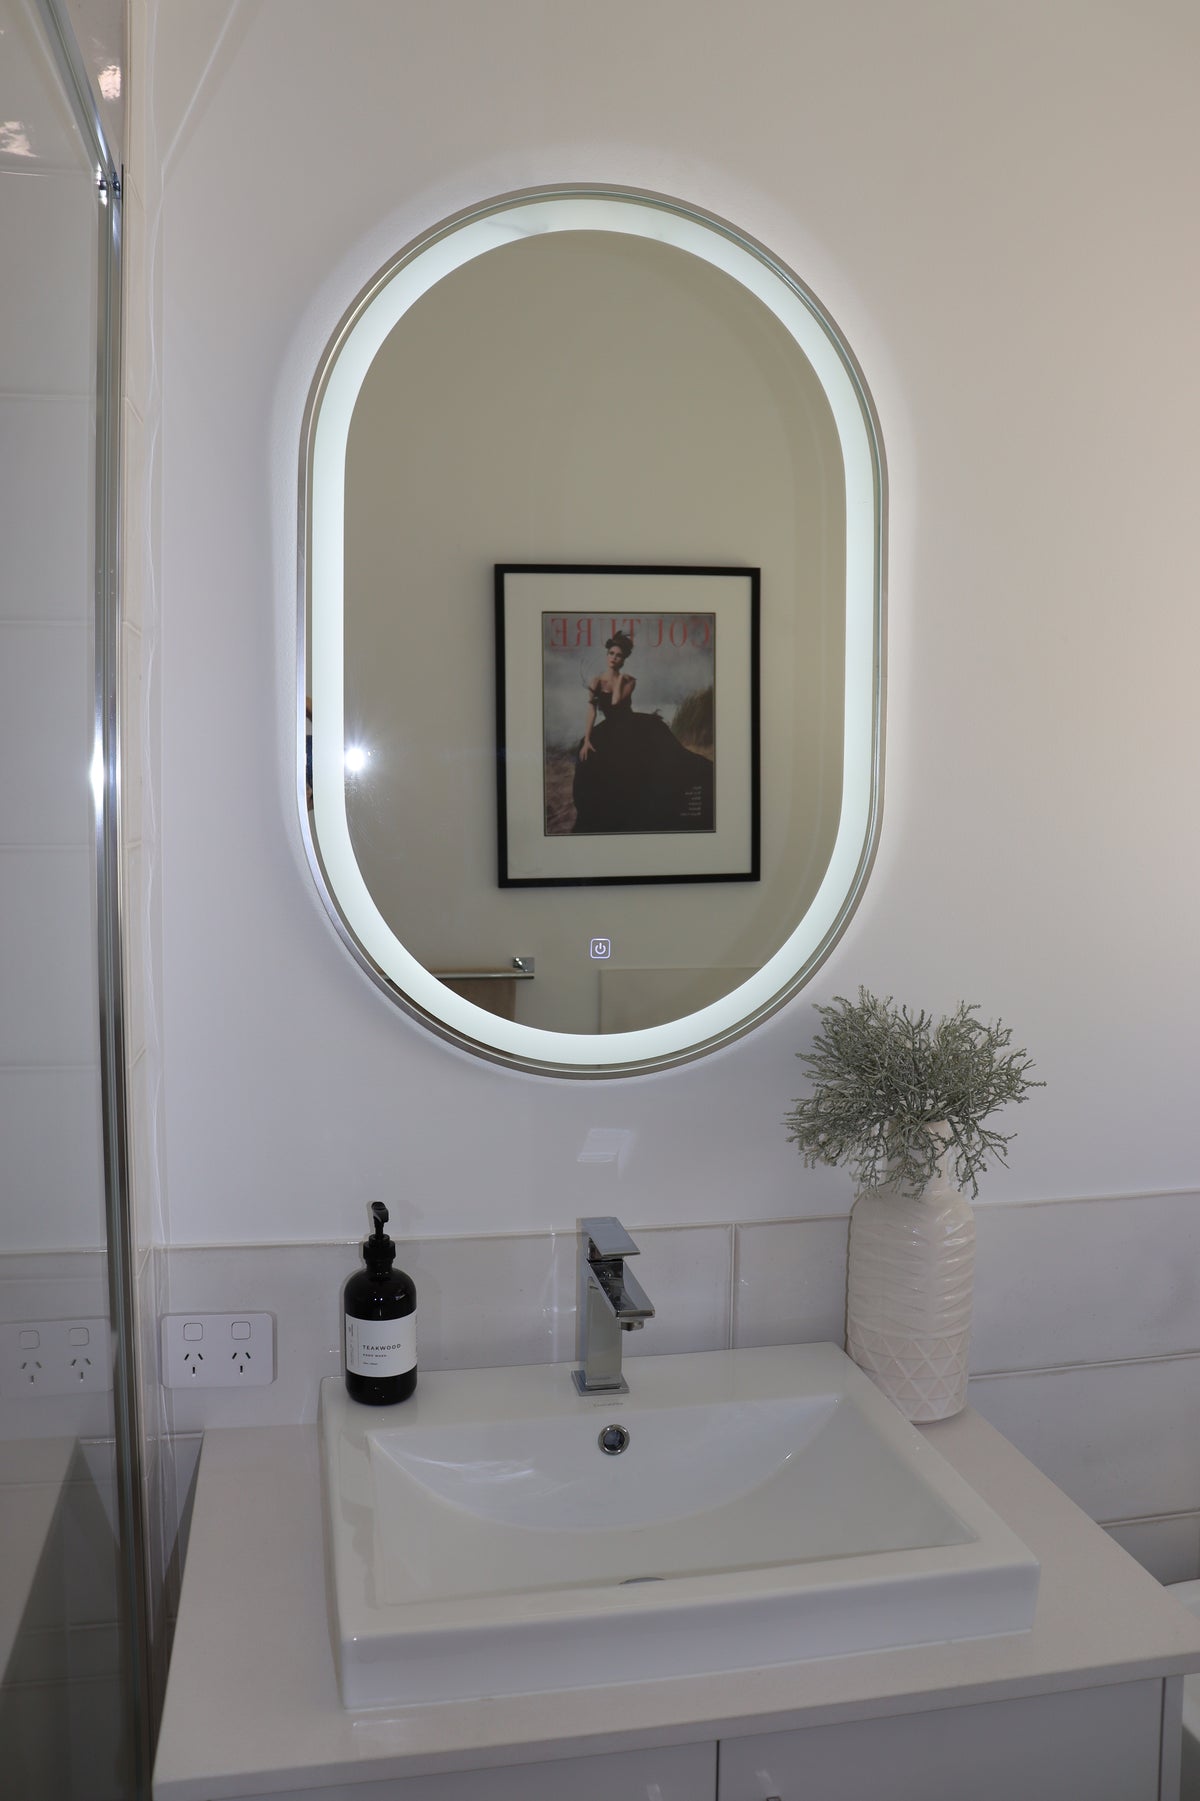 The Valencia ~ (Elegant edition) Invogue Smart mirror